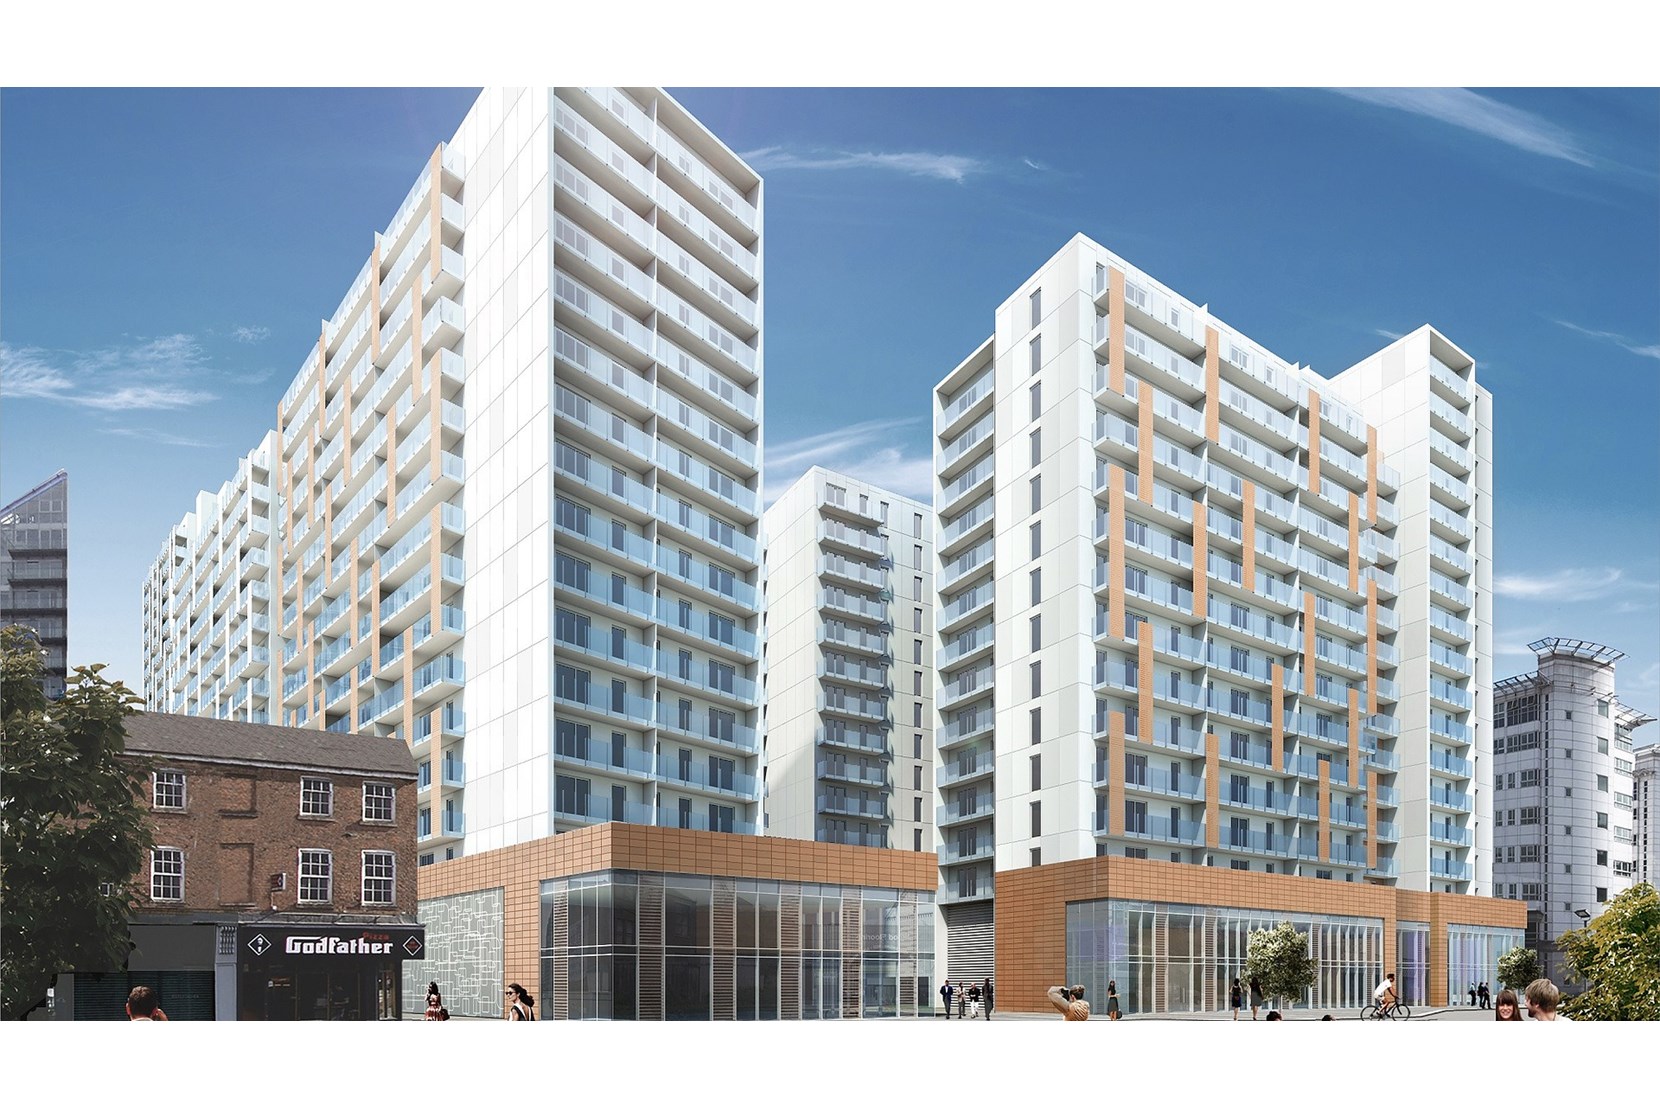 Apartments to Rent by Dandara Living at Chapel Wharf, Salford, M3, development panoramic